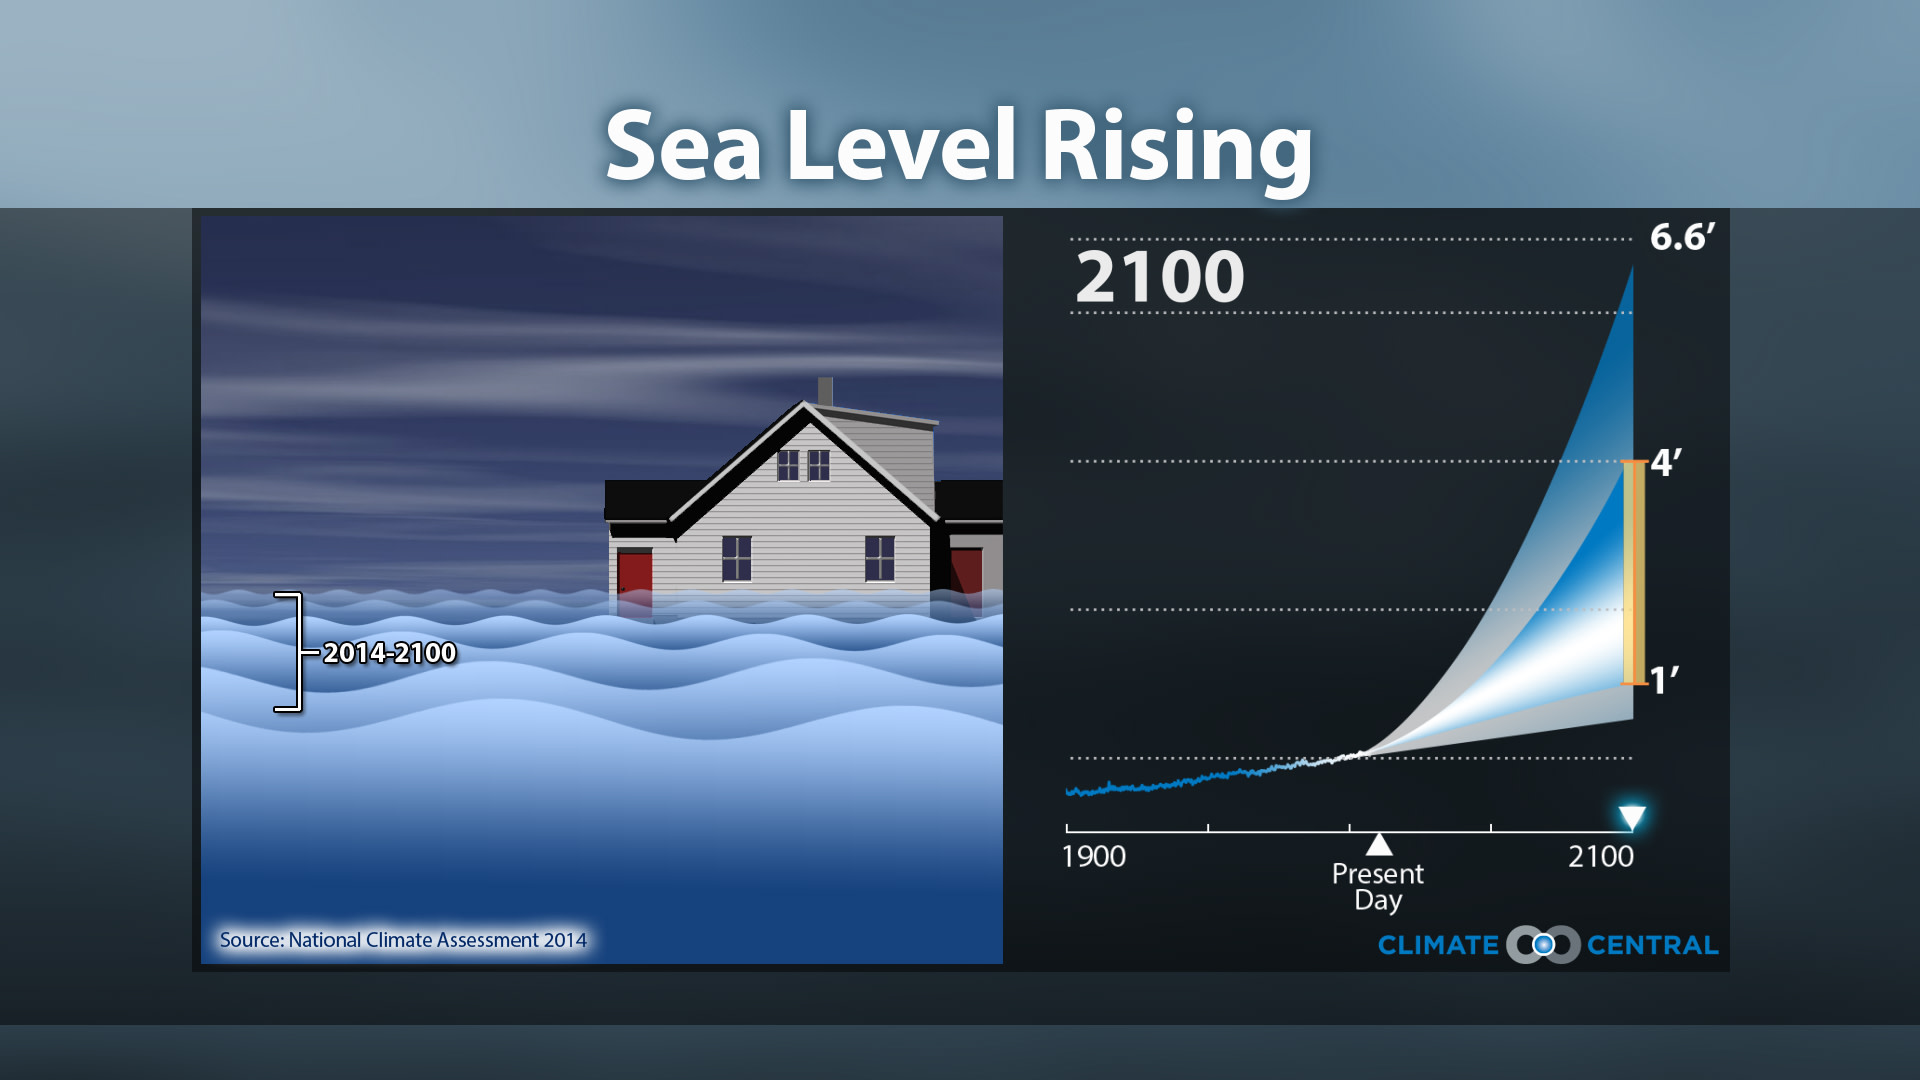 Set 4 - Sea Level Rise is Increasing Coastal Flood Risk